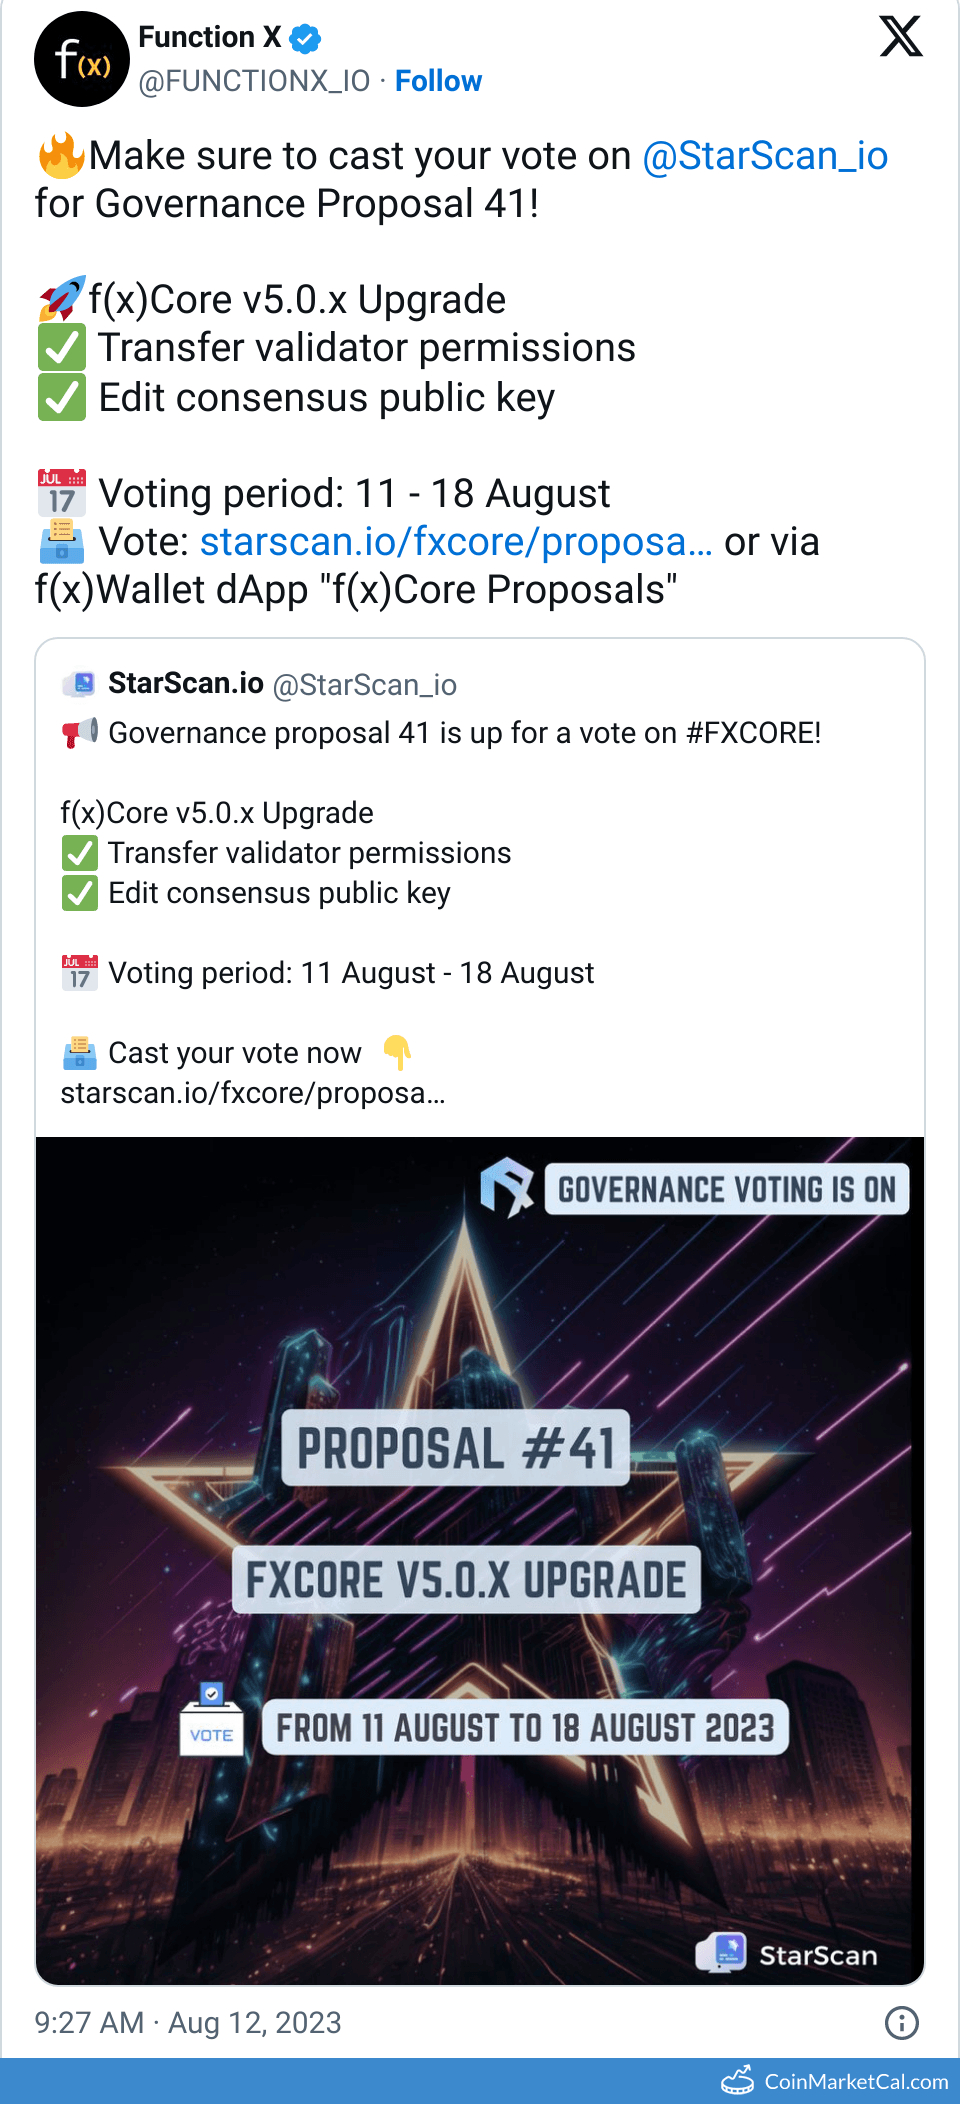 Proposal 41 Vote image